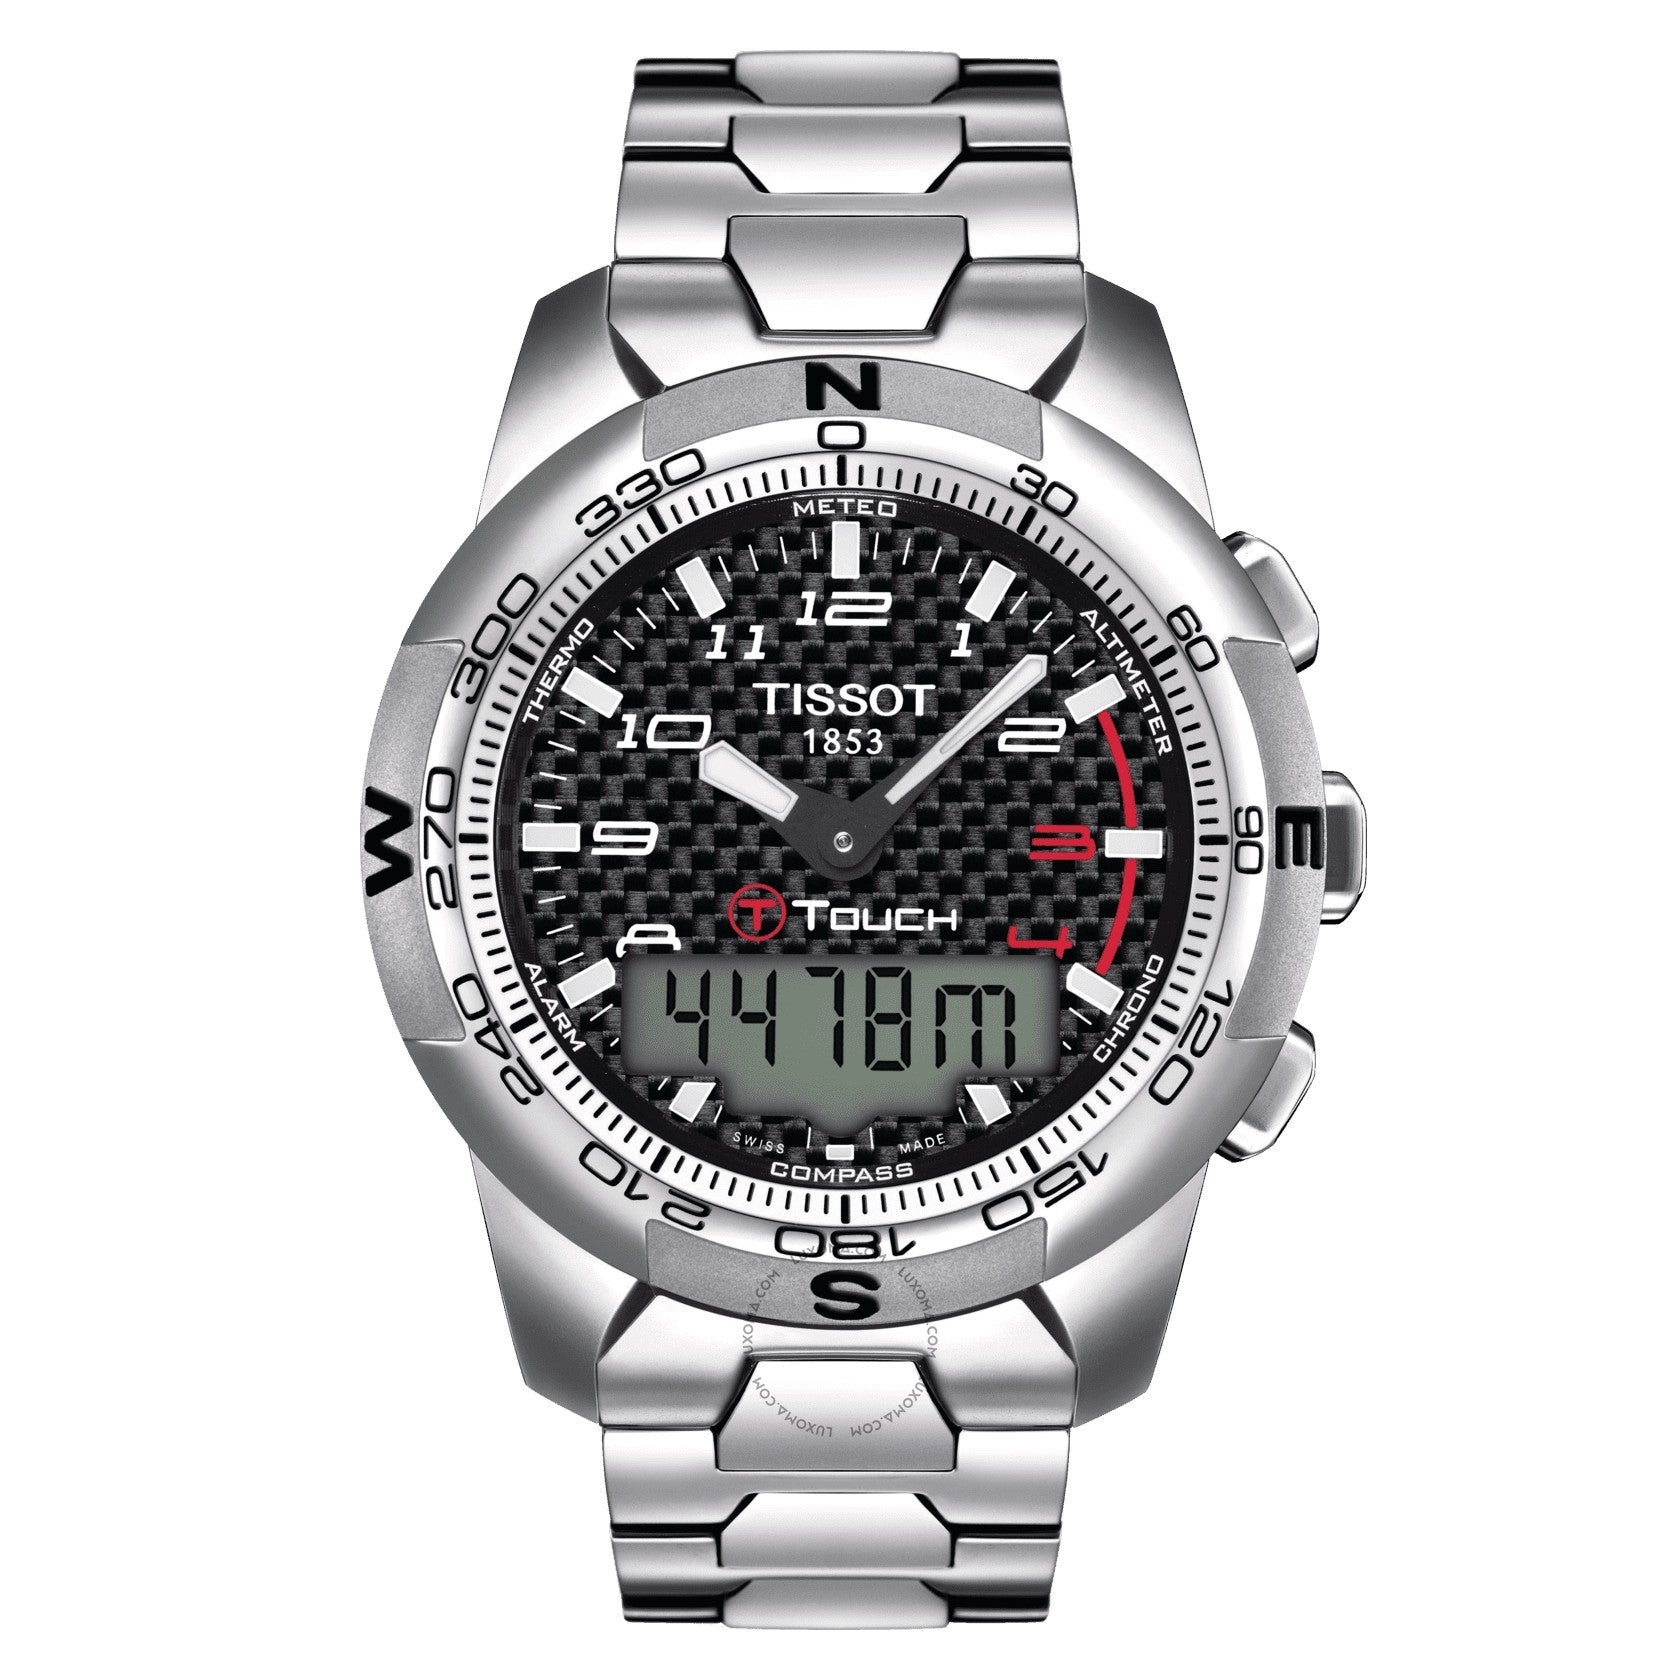 Tissot T-Touch II Chronograph Black Carbon Dial Men's Watch T047.420.44.207.00